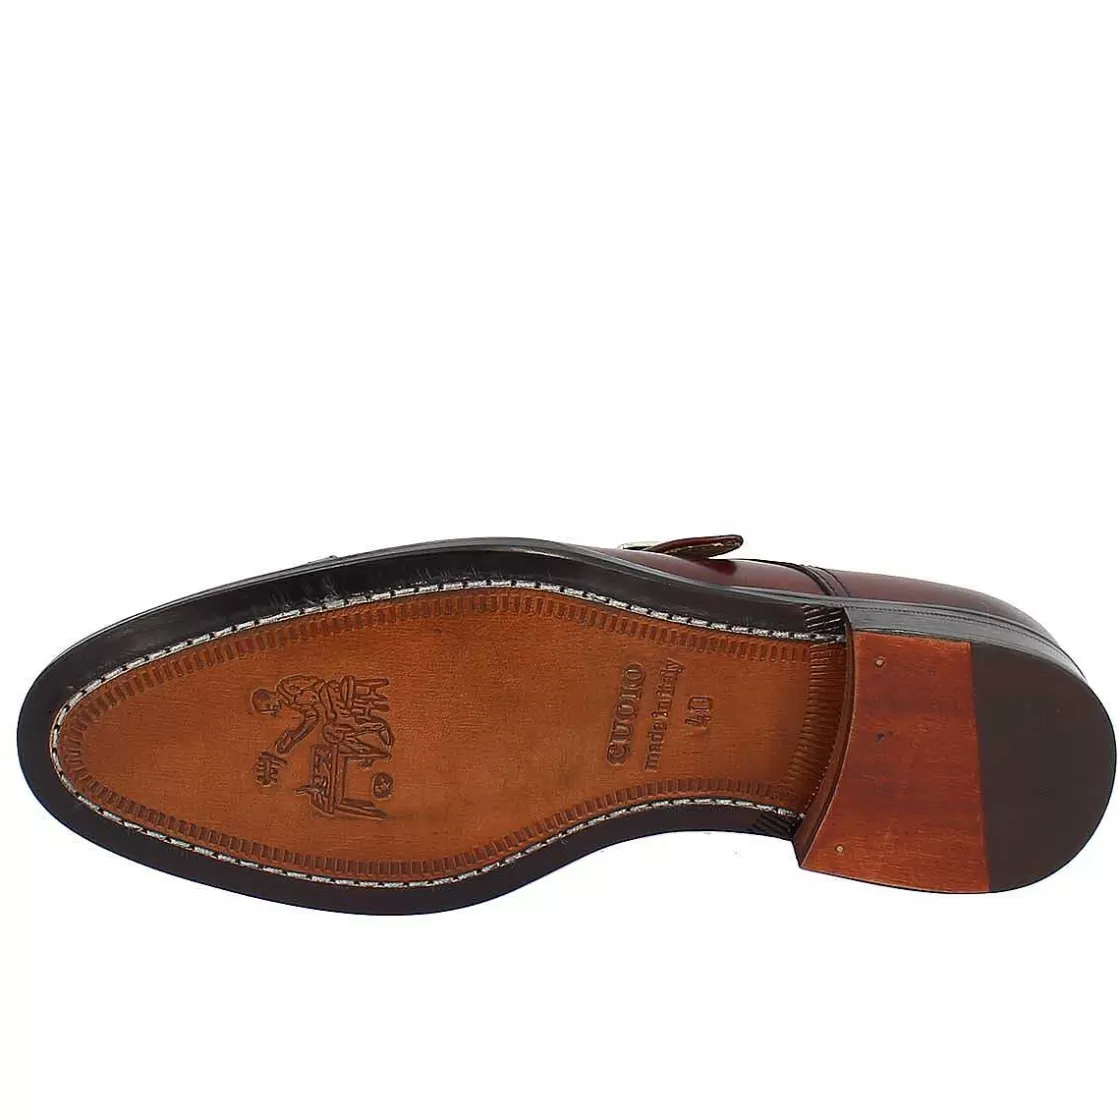 Leonardo Men'S Shoes In Burgundy Leather Handmade With Buckle Hot